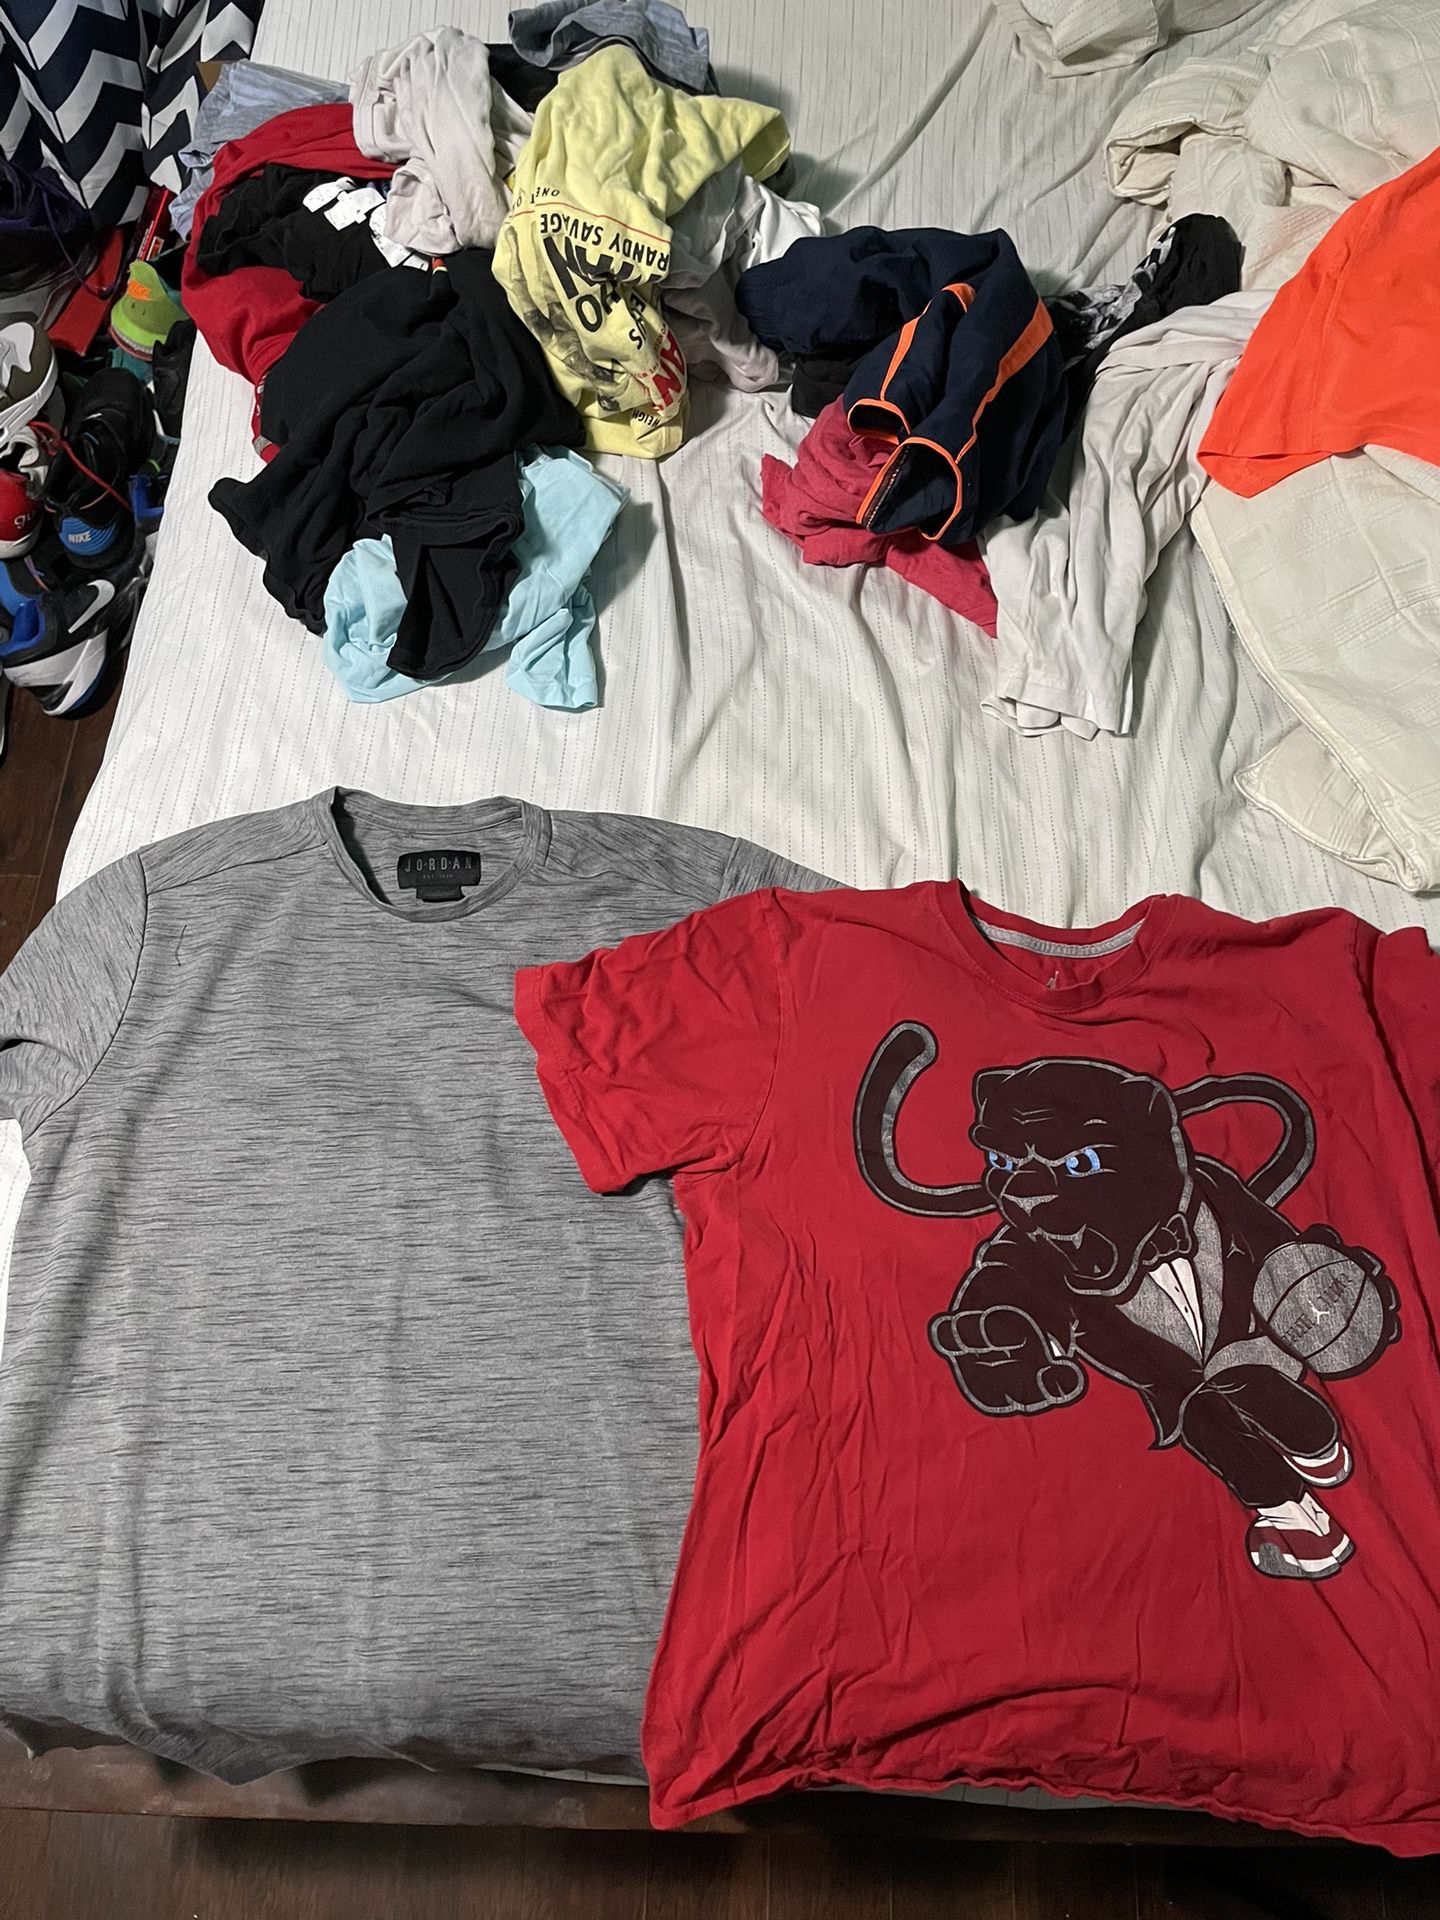 2 Jordan T Shirts Size Large And XL